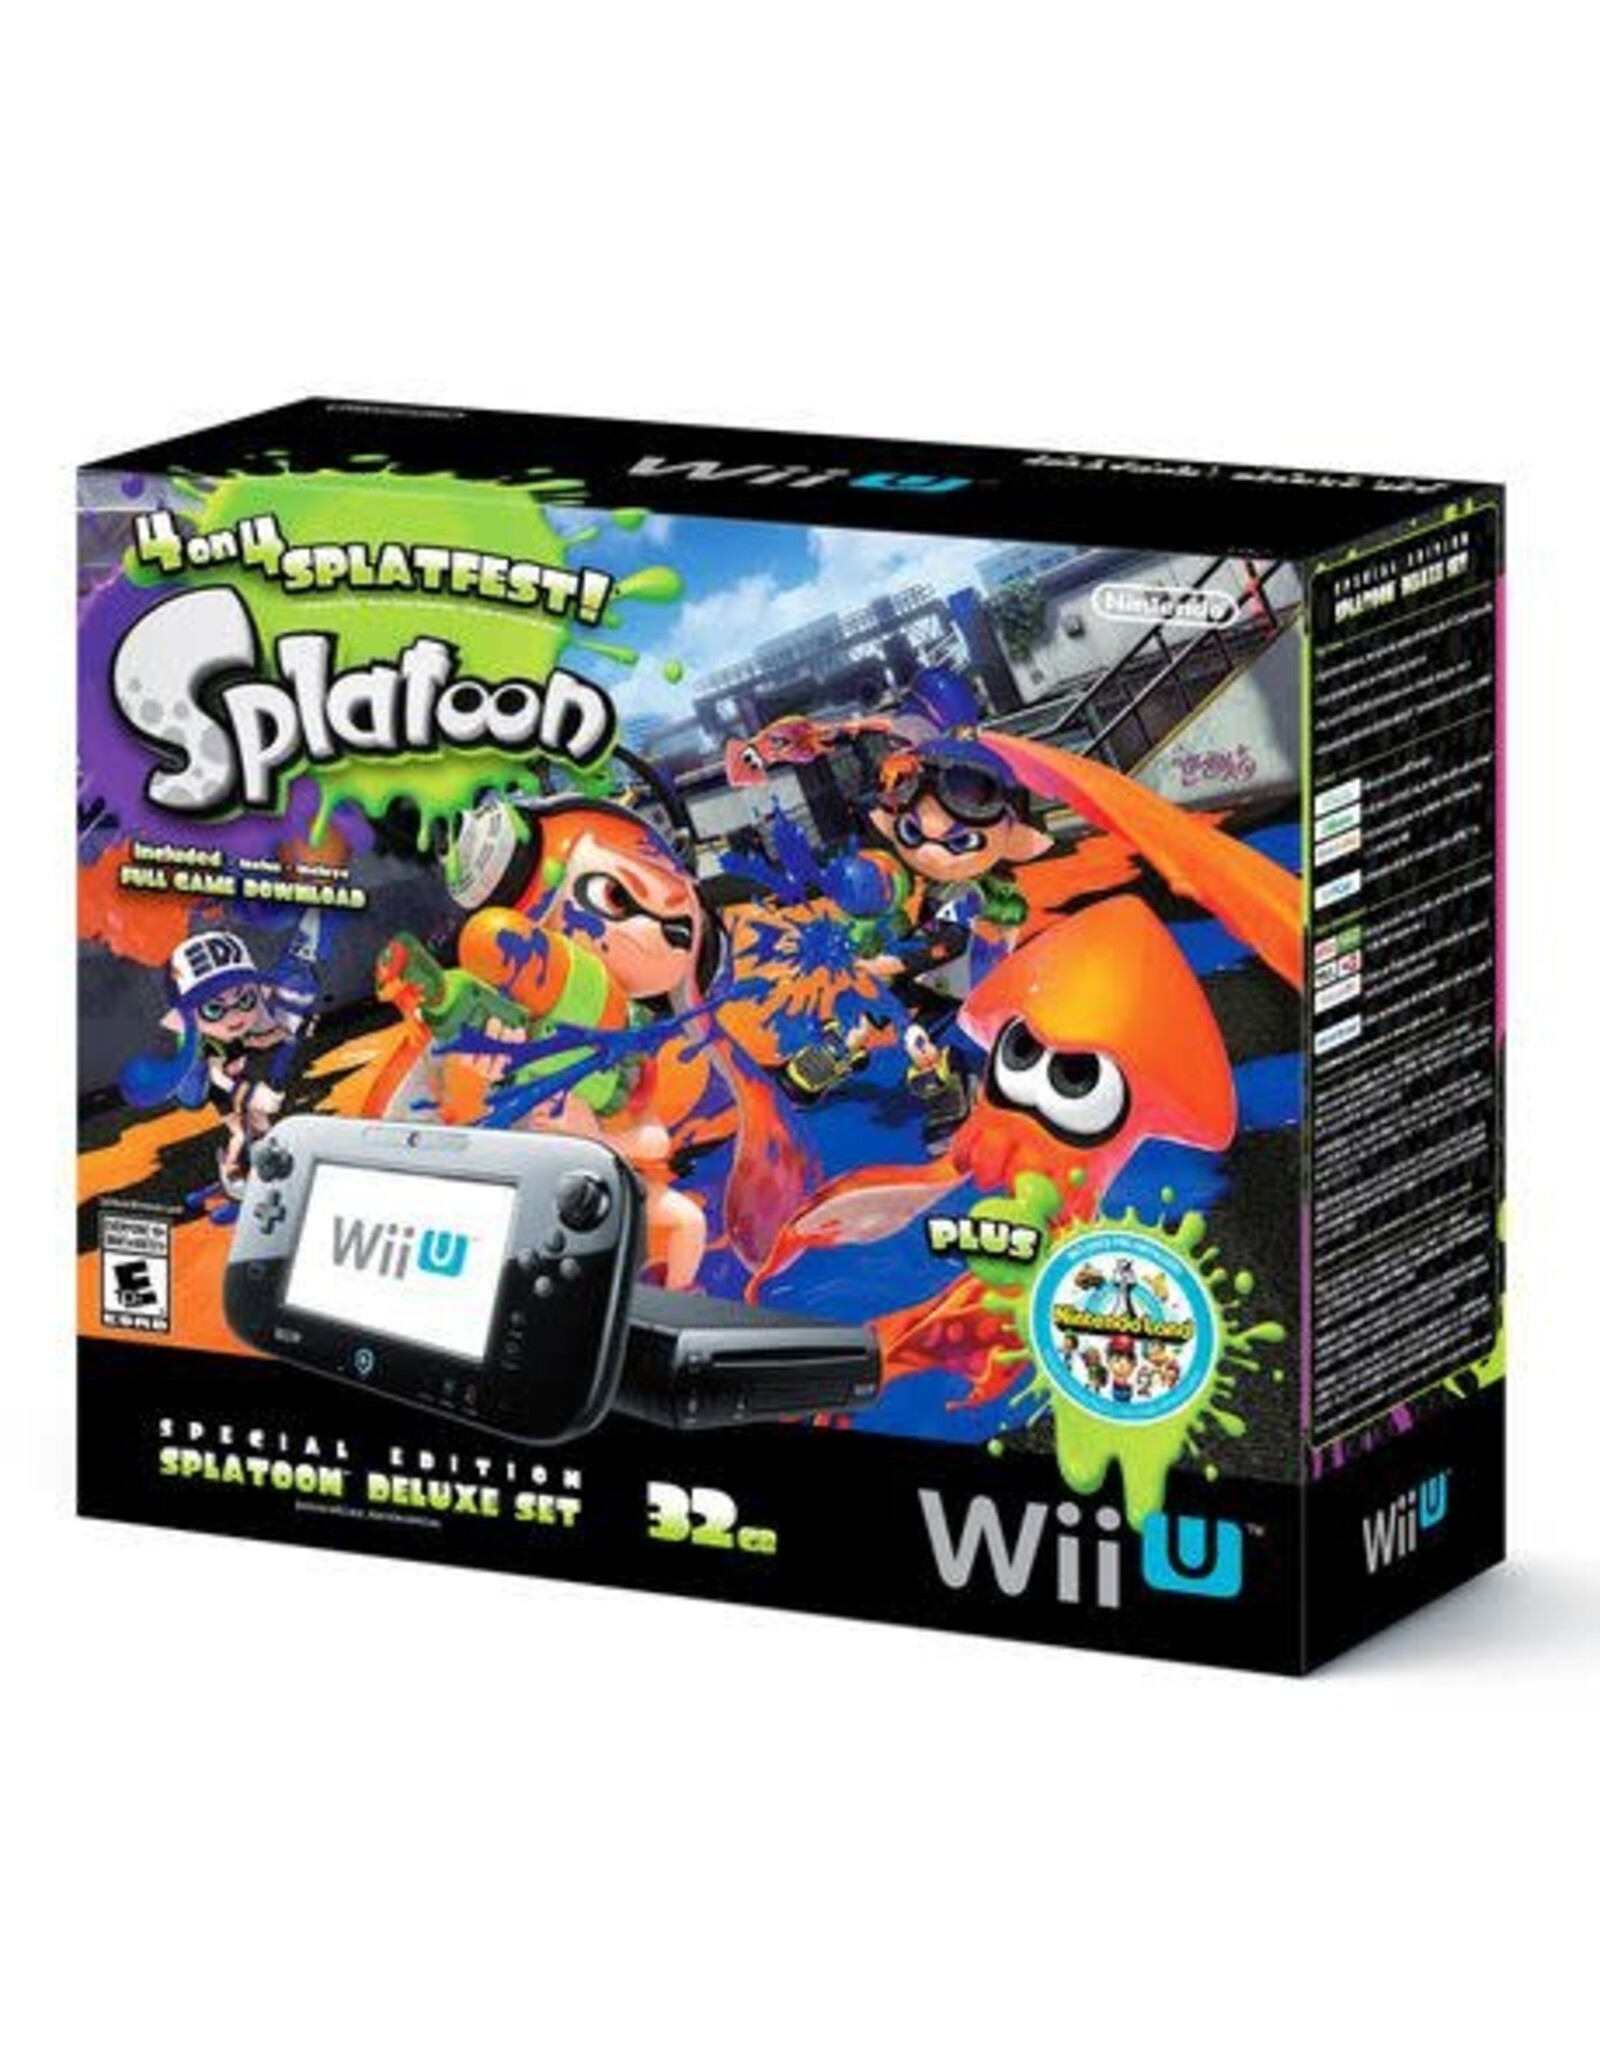 Wii U Wii U 32 GB Console Splatoon Deluxe Set (CiB, Retail Copy of Game)